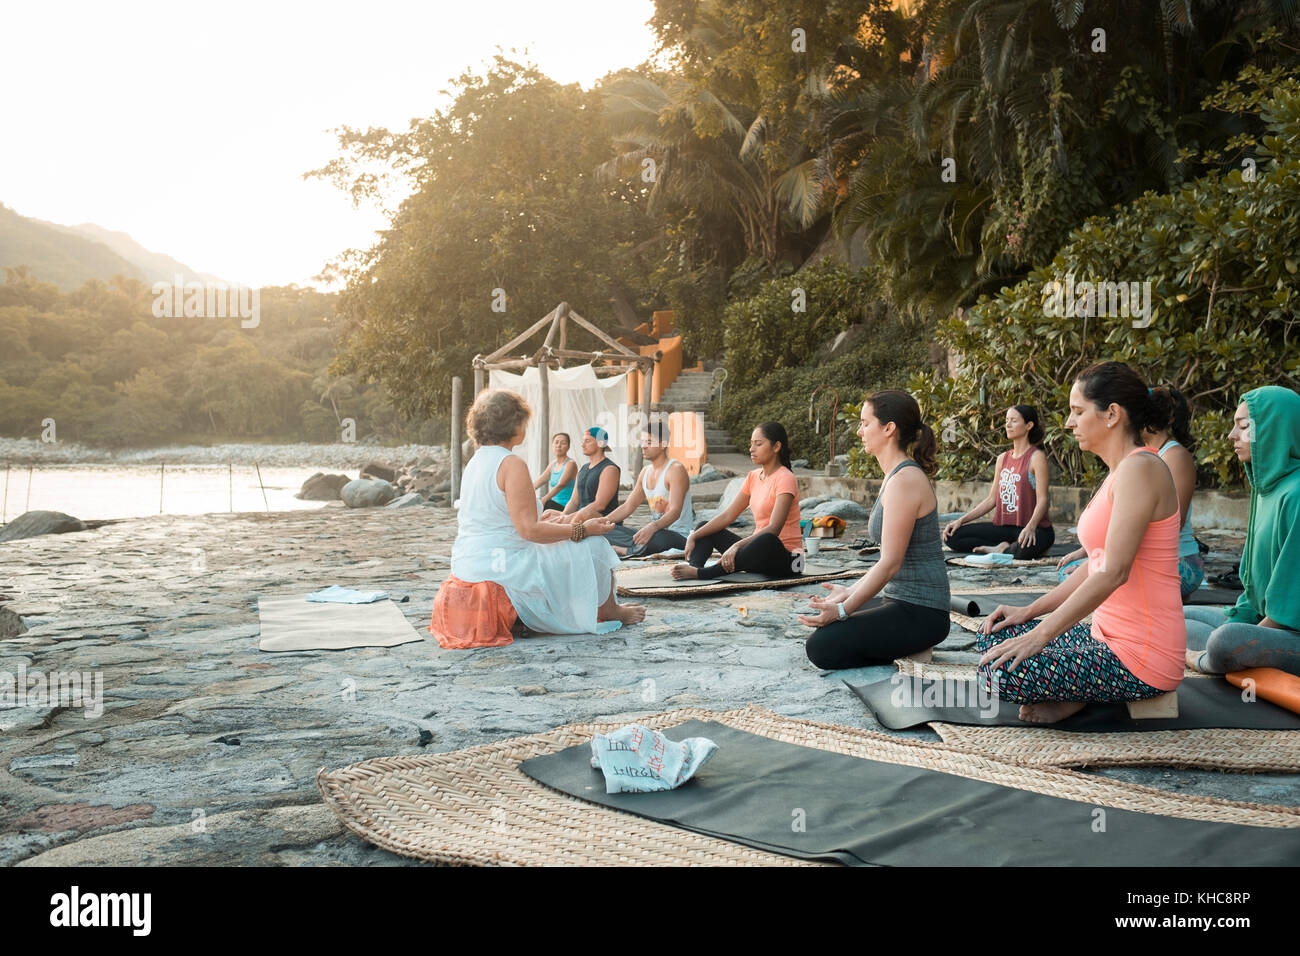 Yoga retreat Puerto Vallarta - Mismaloya, Mexico - multiple people sitting on yoga mats meditating with eyes closed. Stock Photo